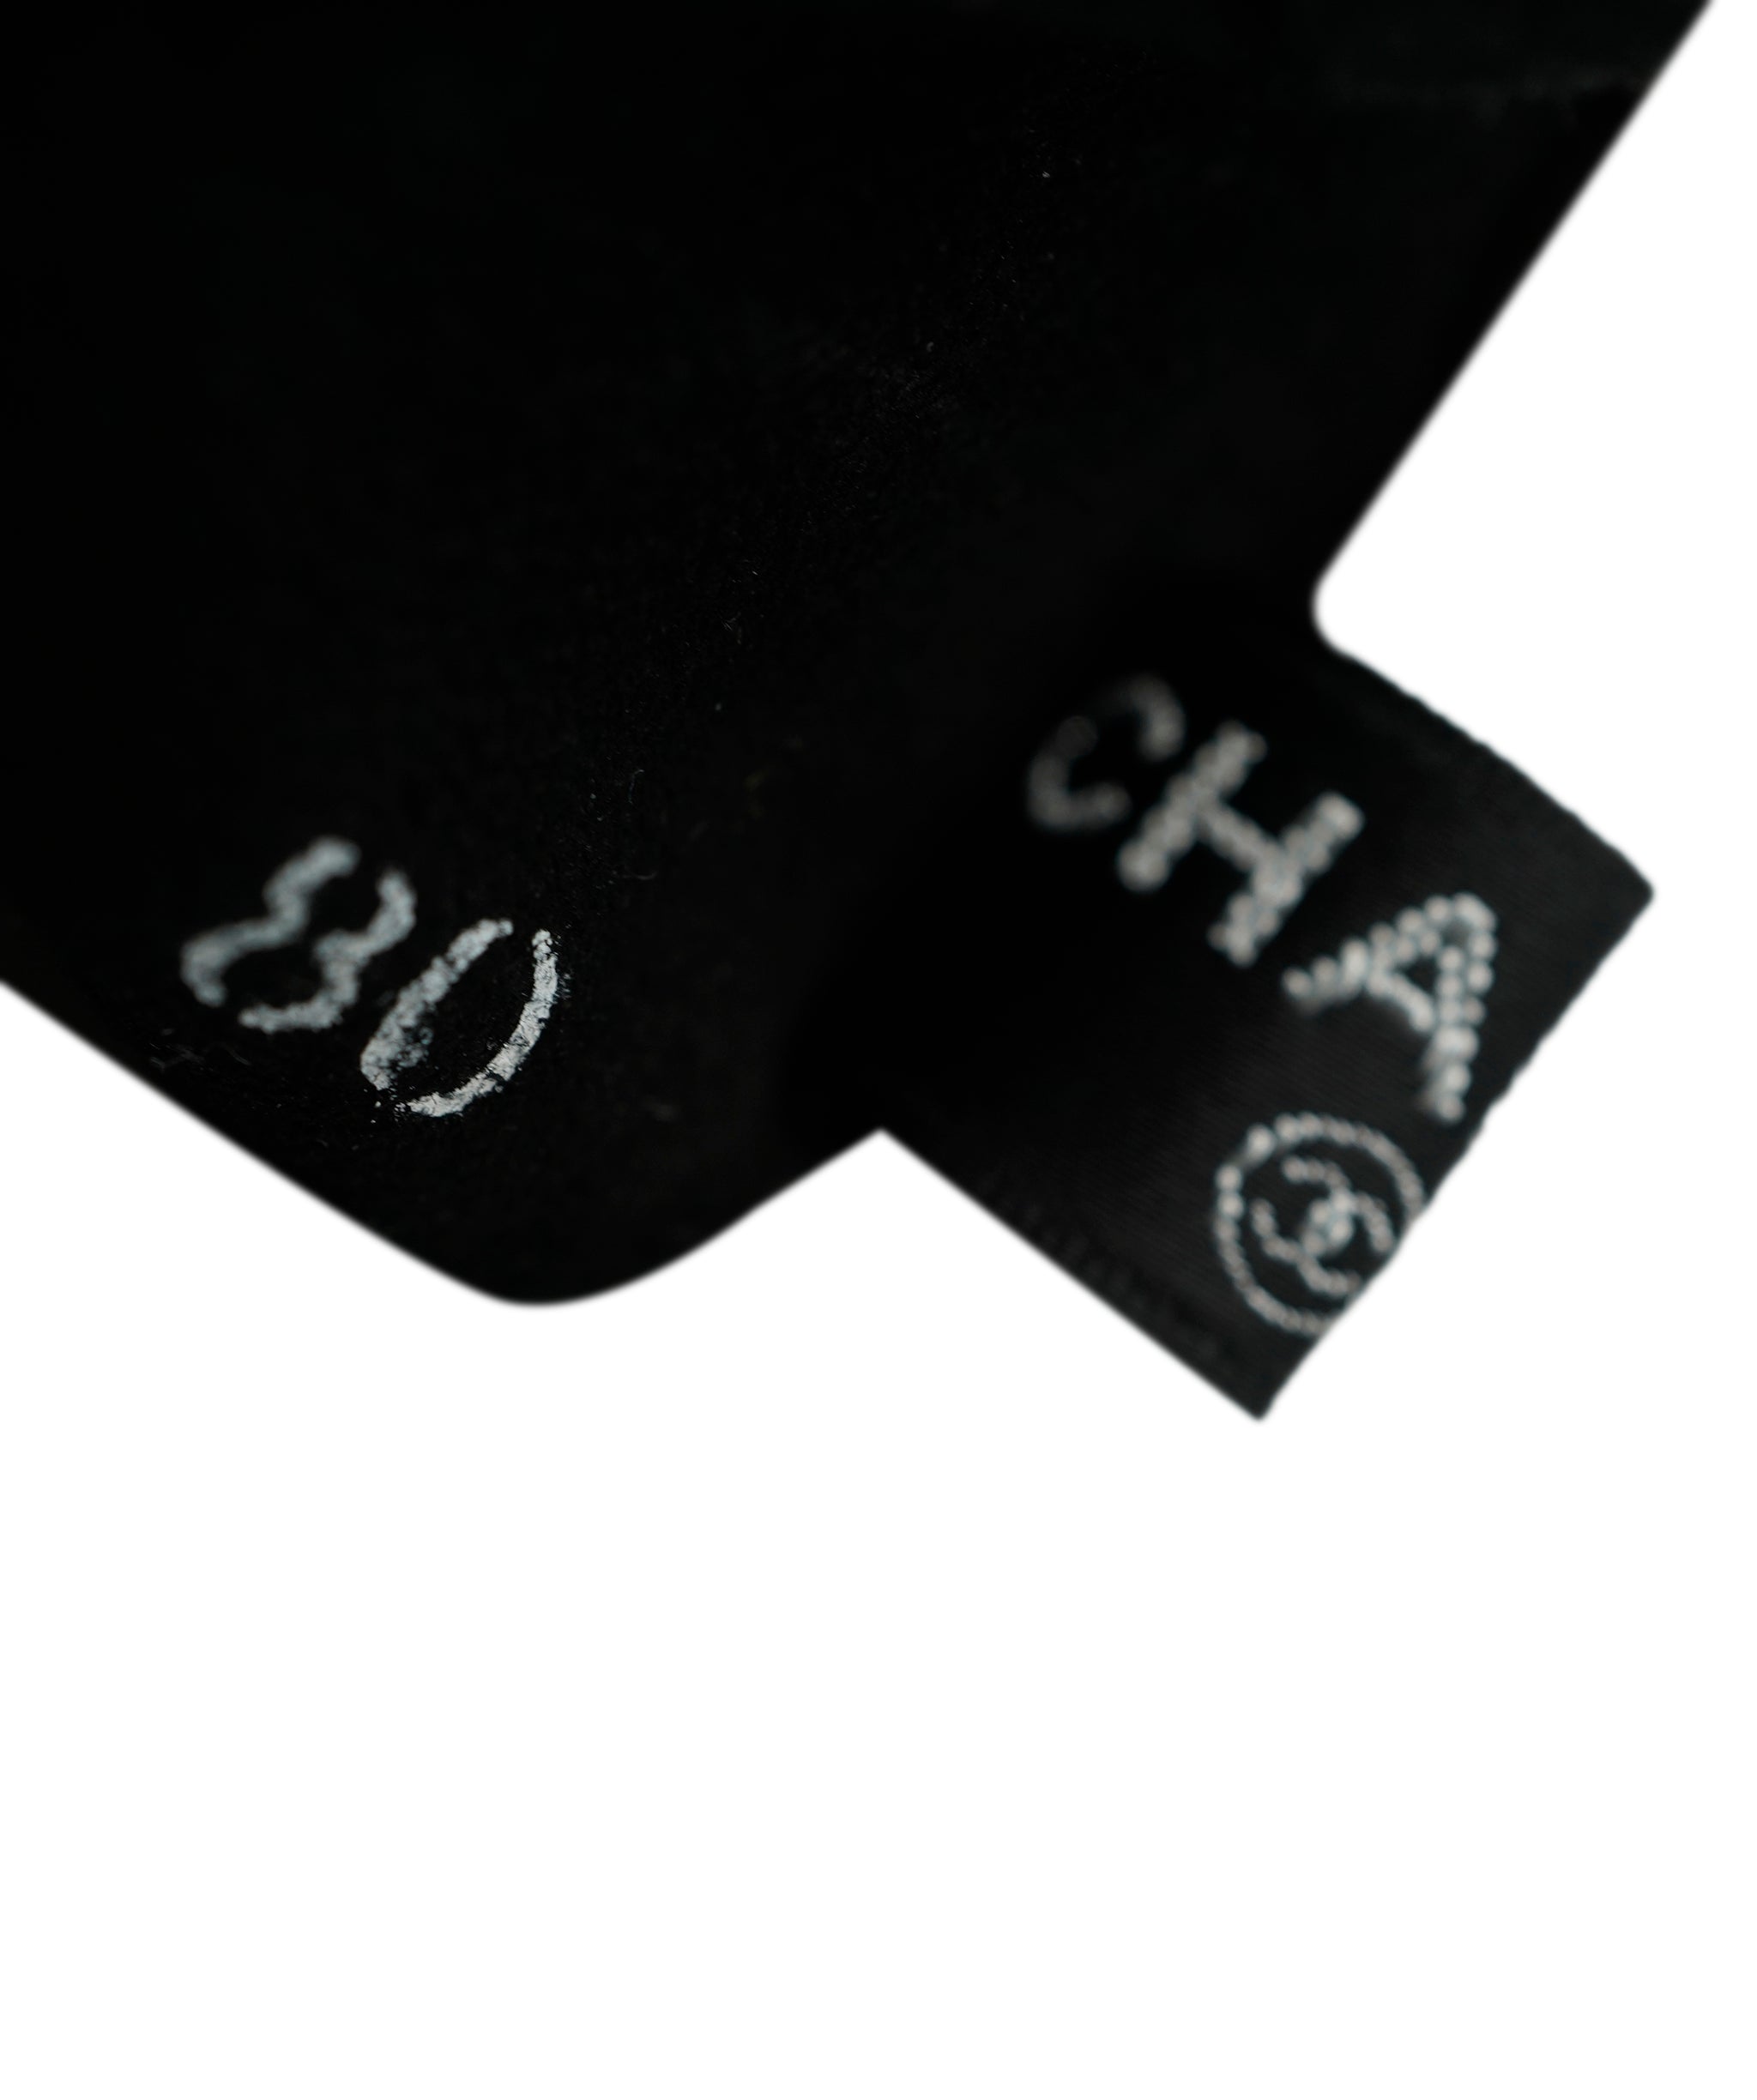 Chanel Chanel Gloves Stripe Cc ASL4992